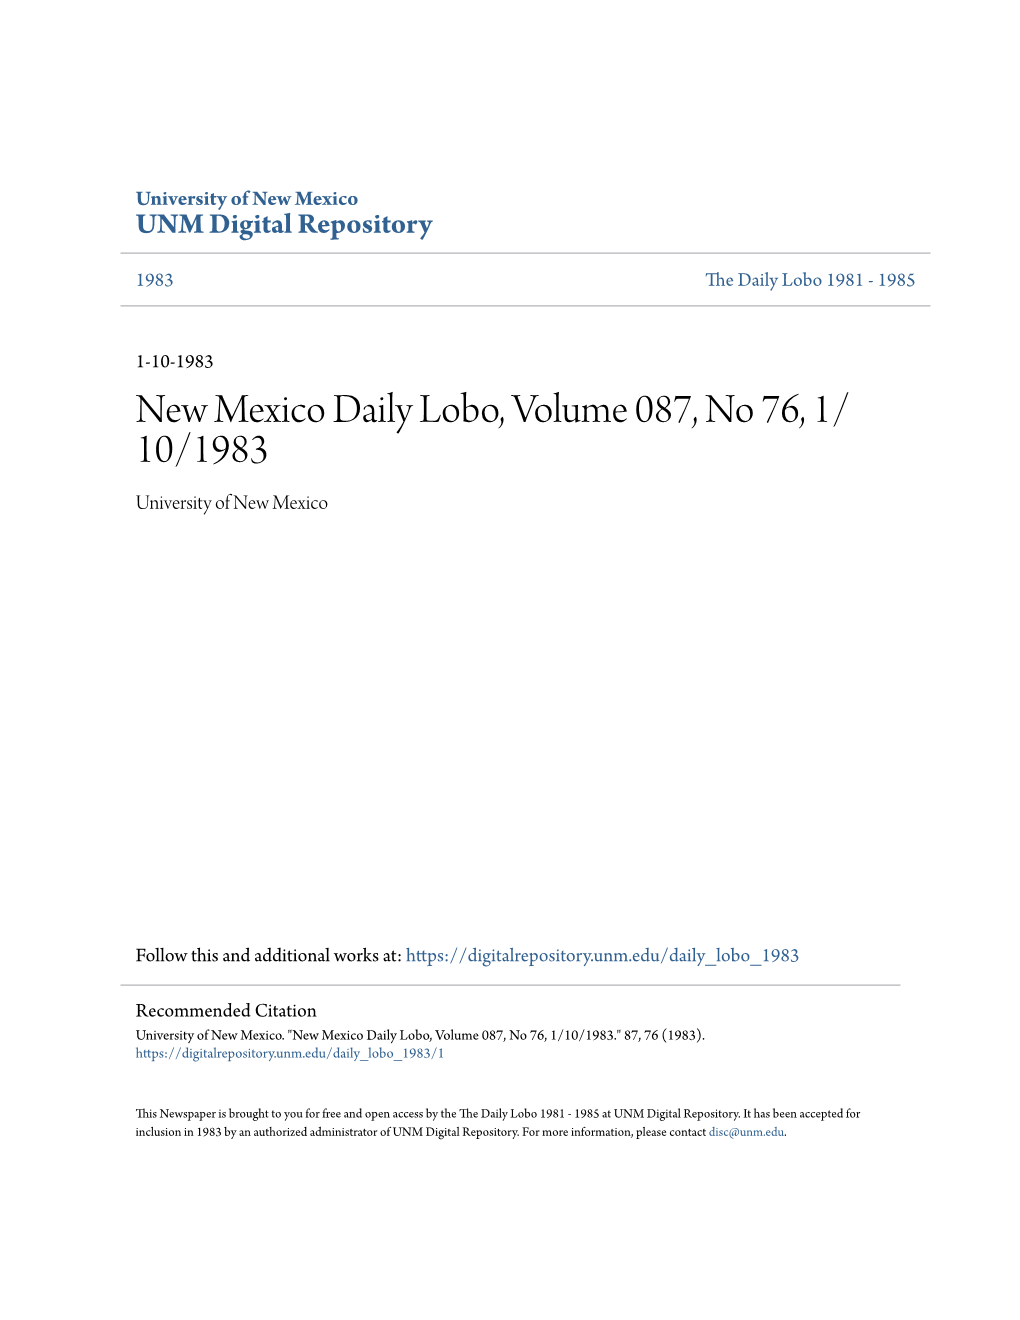 New Mexico Daily Lobo, Volume 087, No 76, 1/10/1983." 87, 76 (1983)